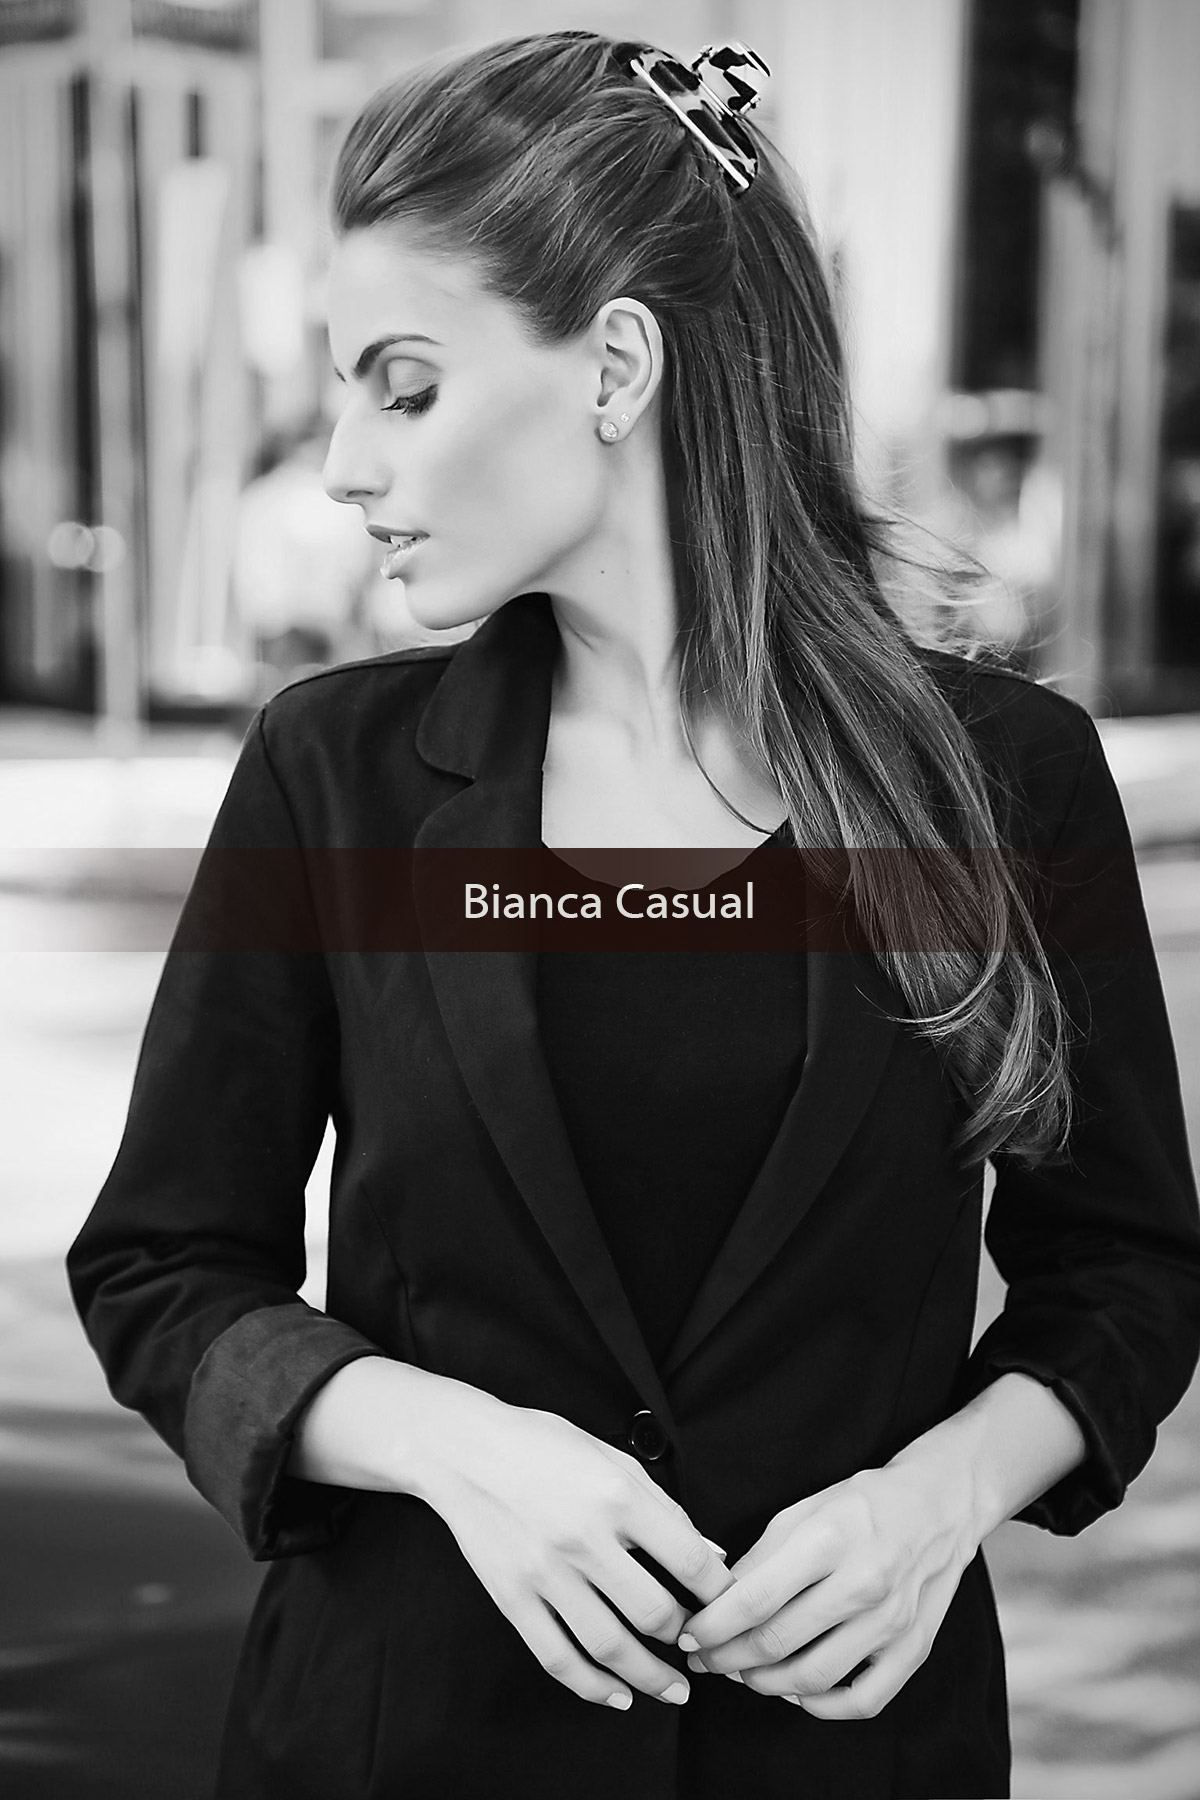 Bianca Casual